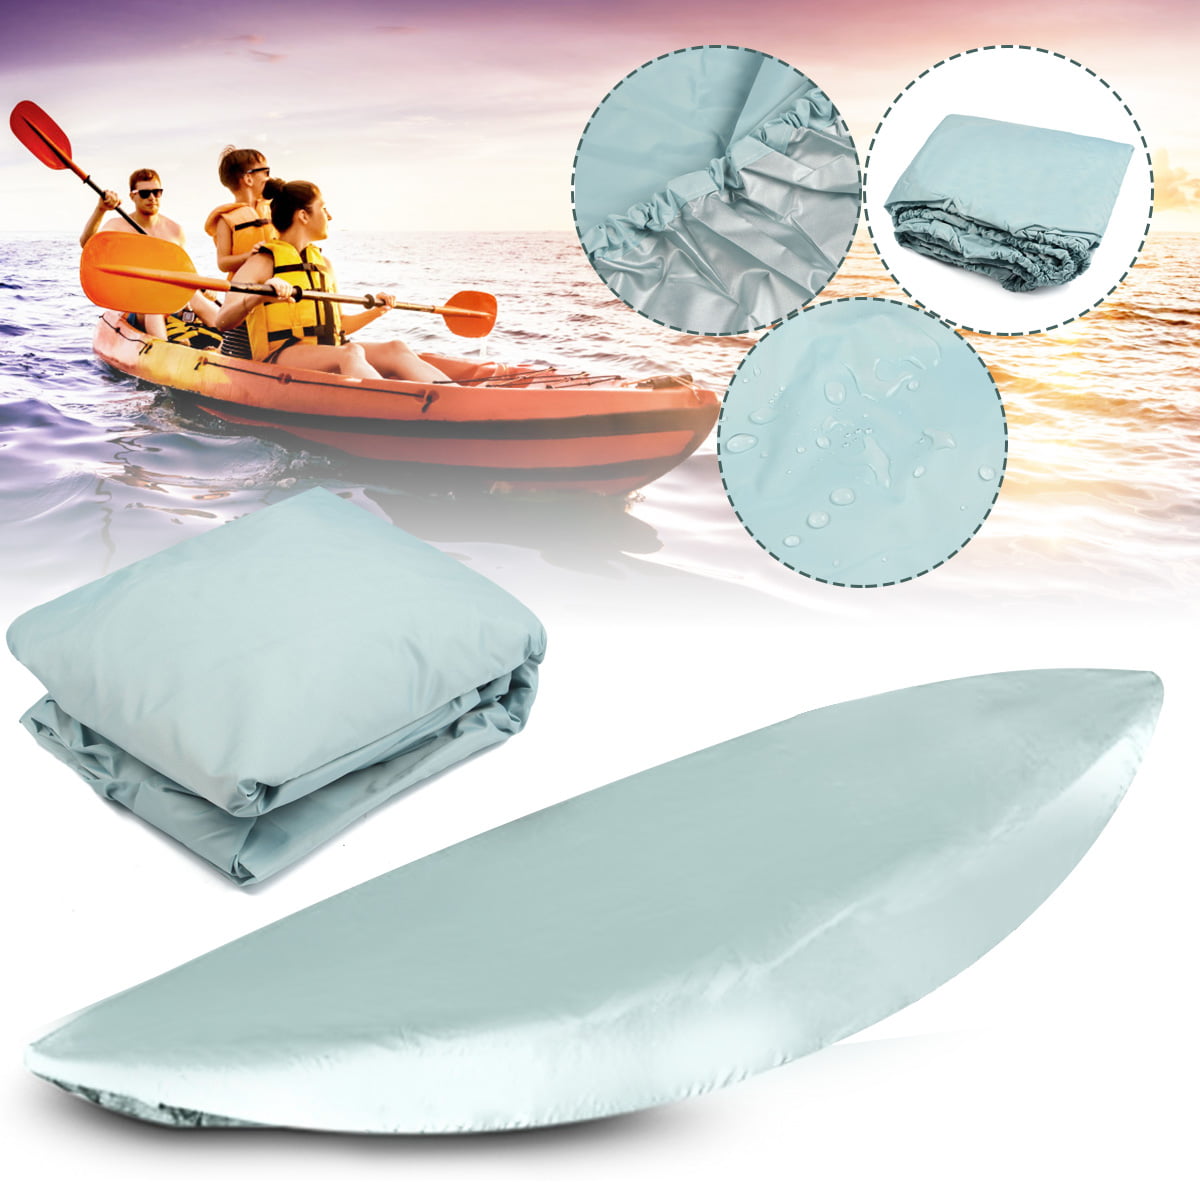 Waterproof UV Sun Protection Kayak Canoe Storage Cover Shield Camouflage 